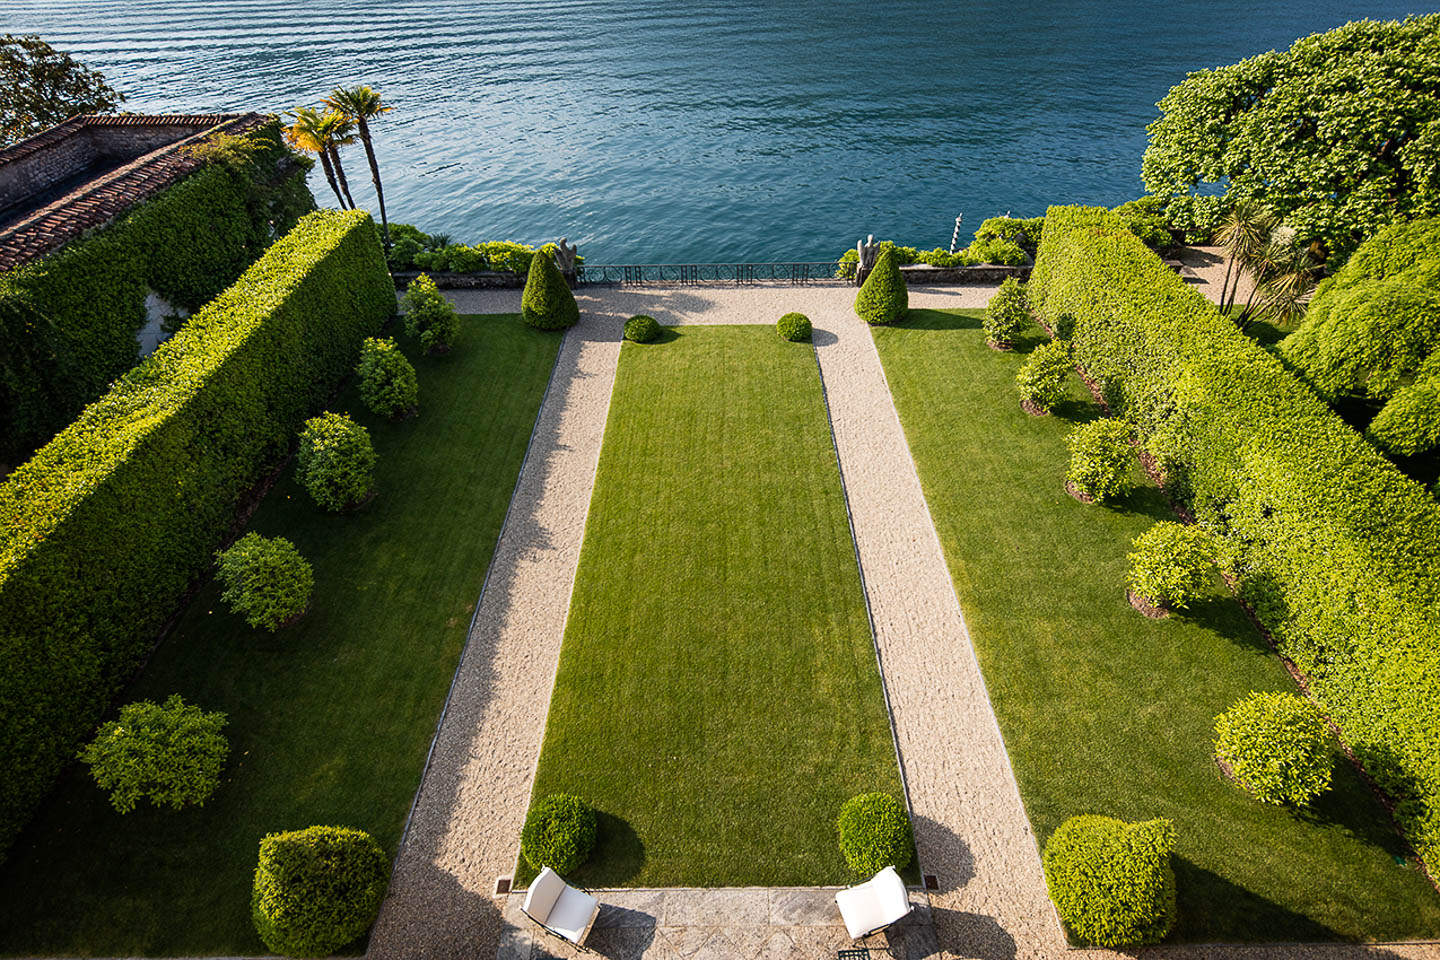 Villa-Balbiano-luxury-property-Lake-Como-Italy-wedding-ceremony-green-best-area-destination-wedding-event-party-boat-access-service-best-garden-decor-design.jpg